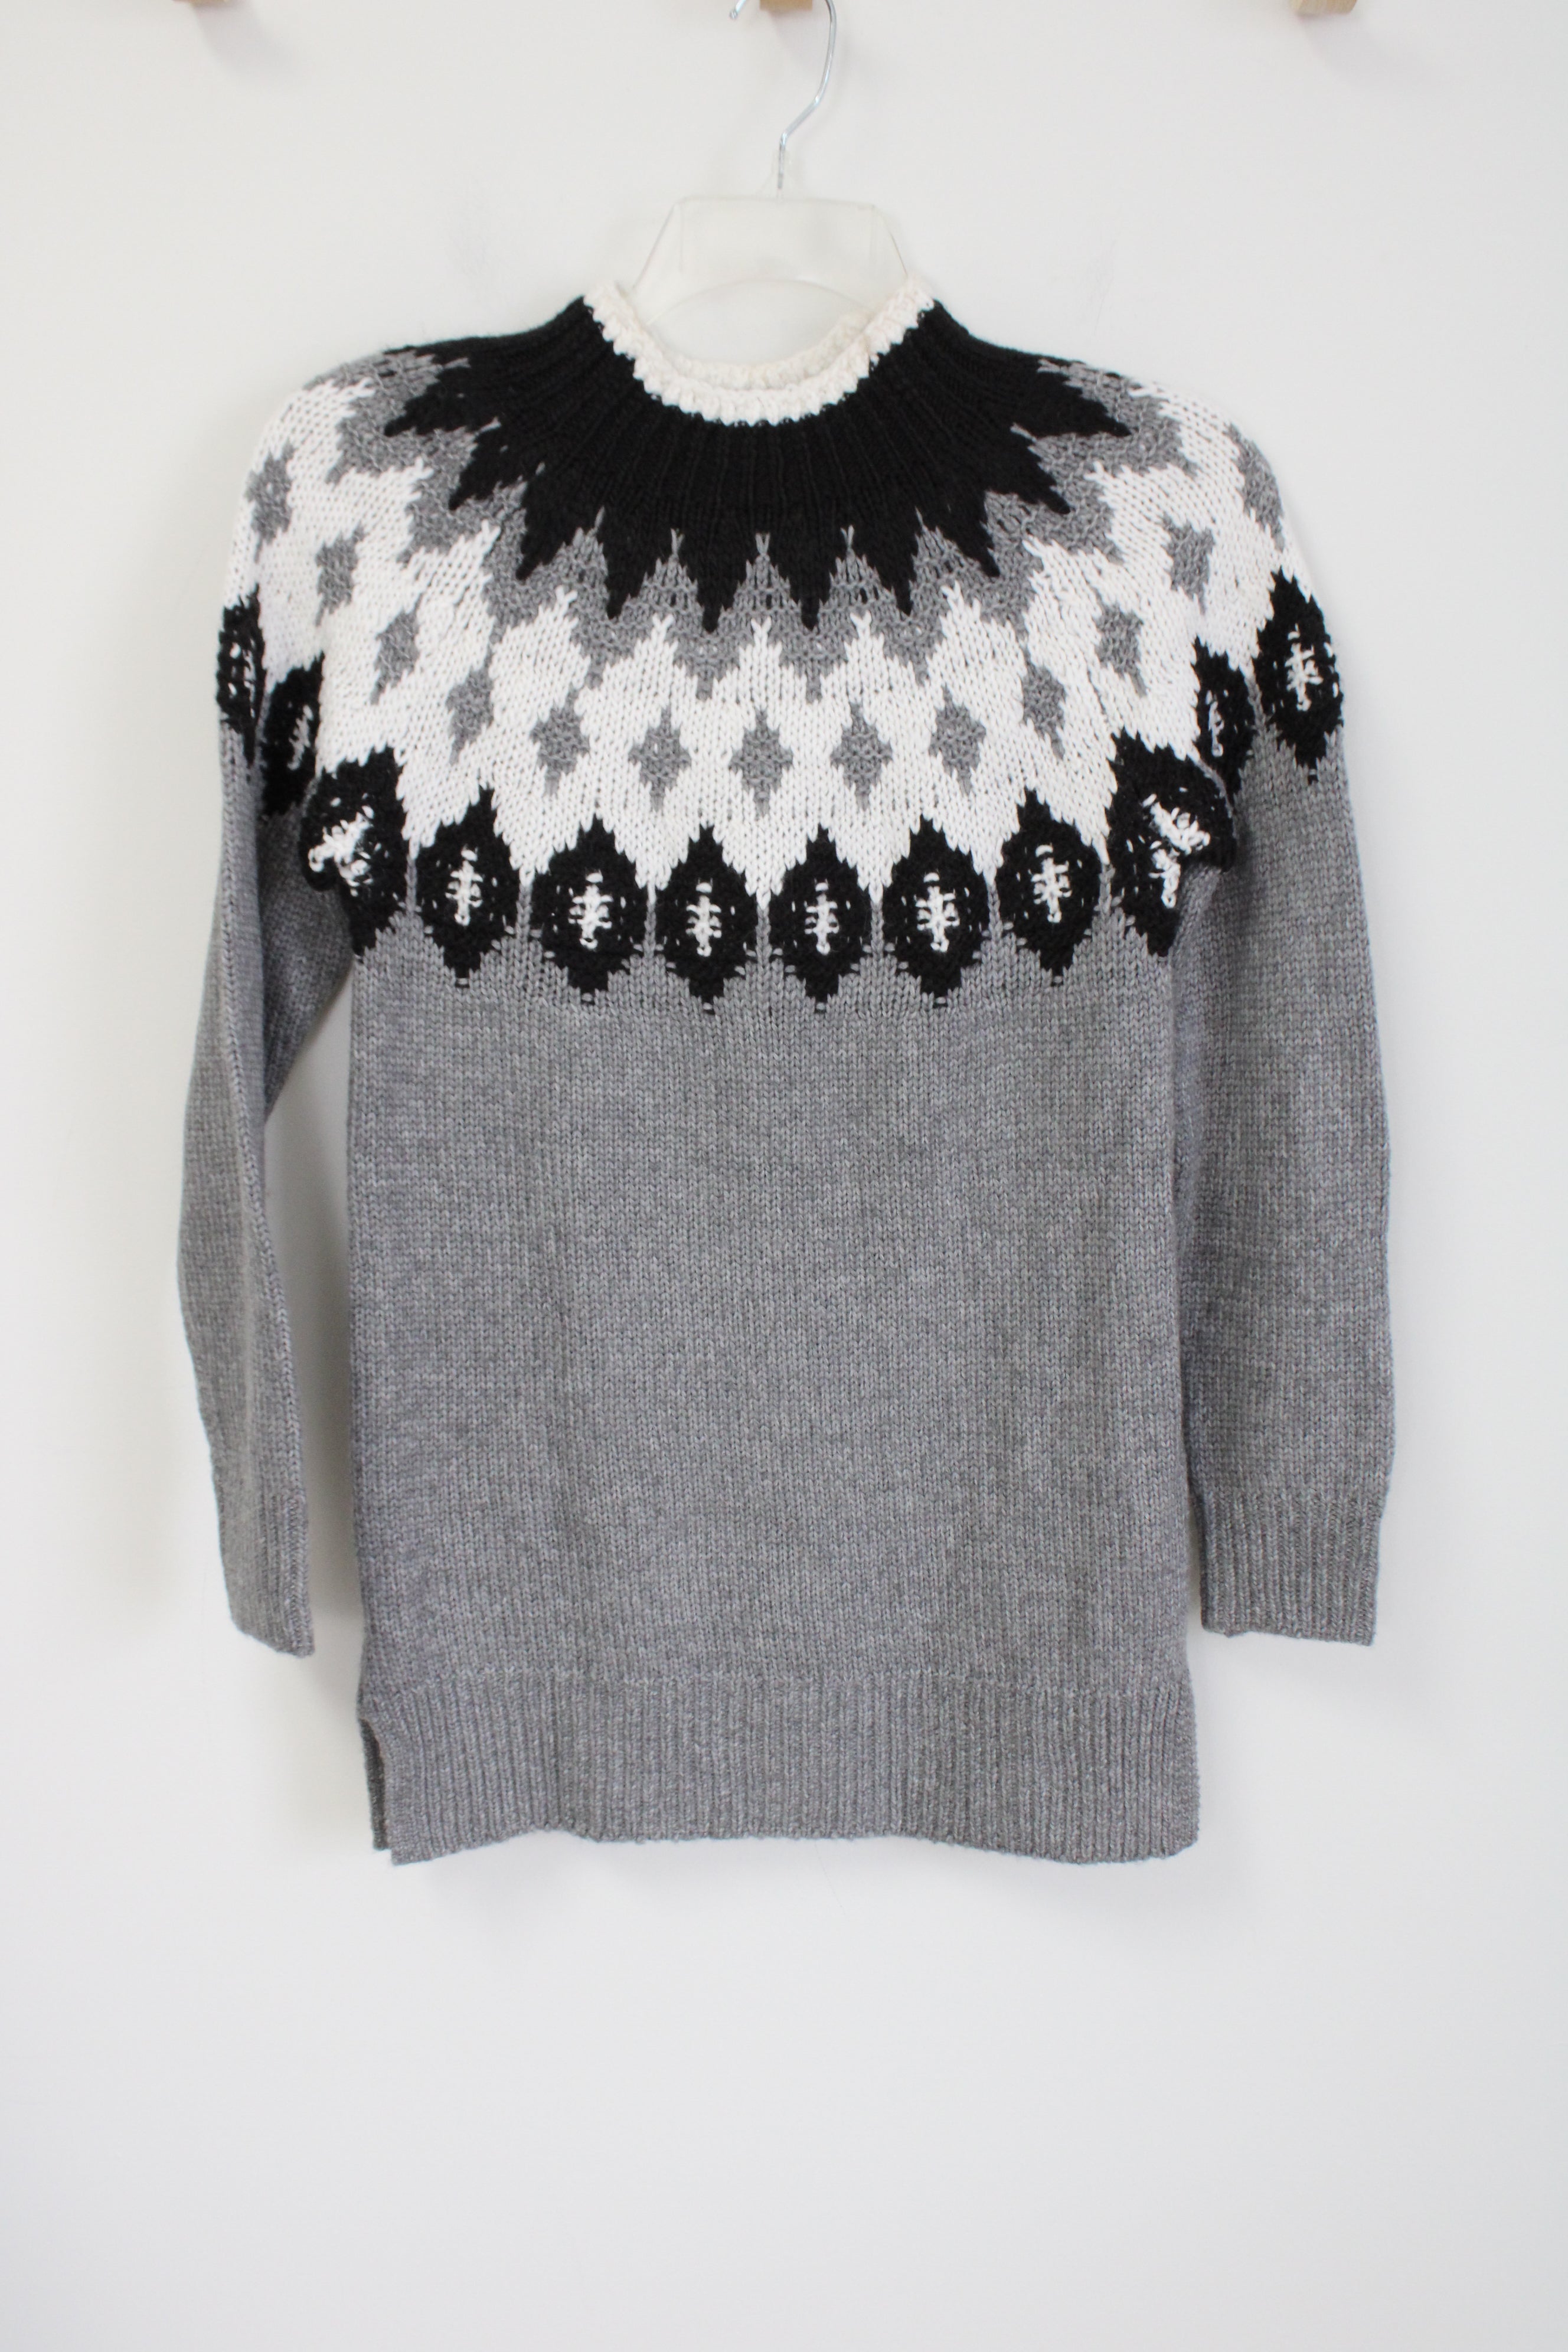 LOFT Fair Isle Gray Black White Sweater | S